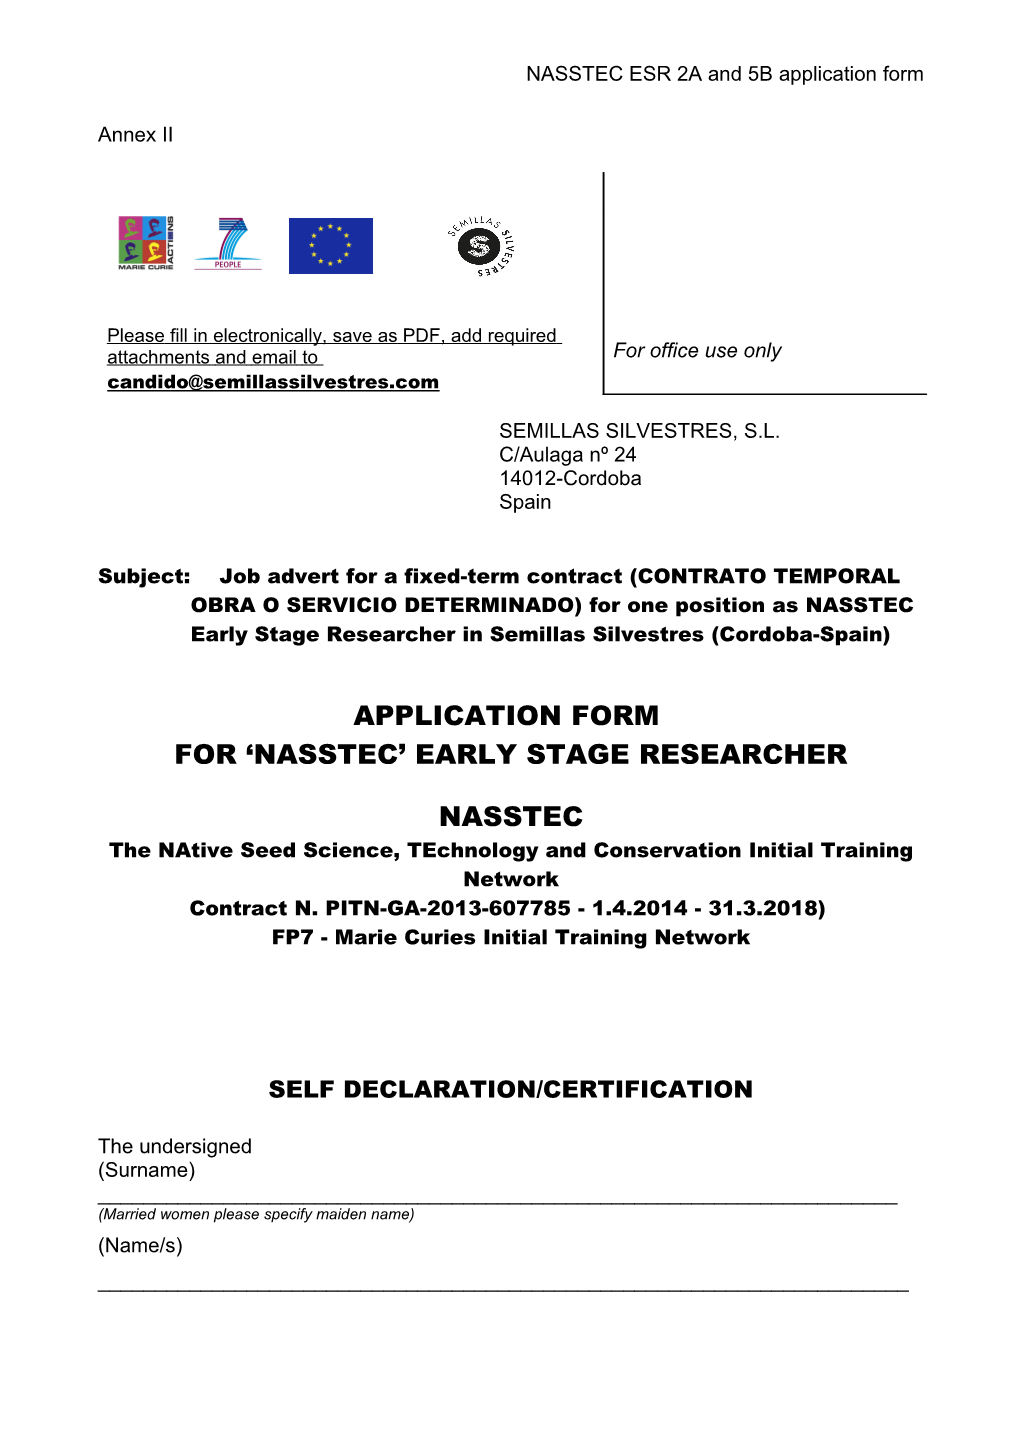 NASSTEC ESR 2A and 5B Application Form